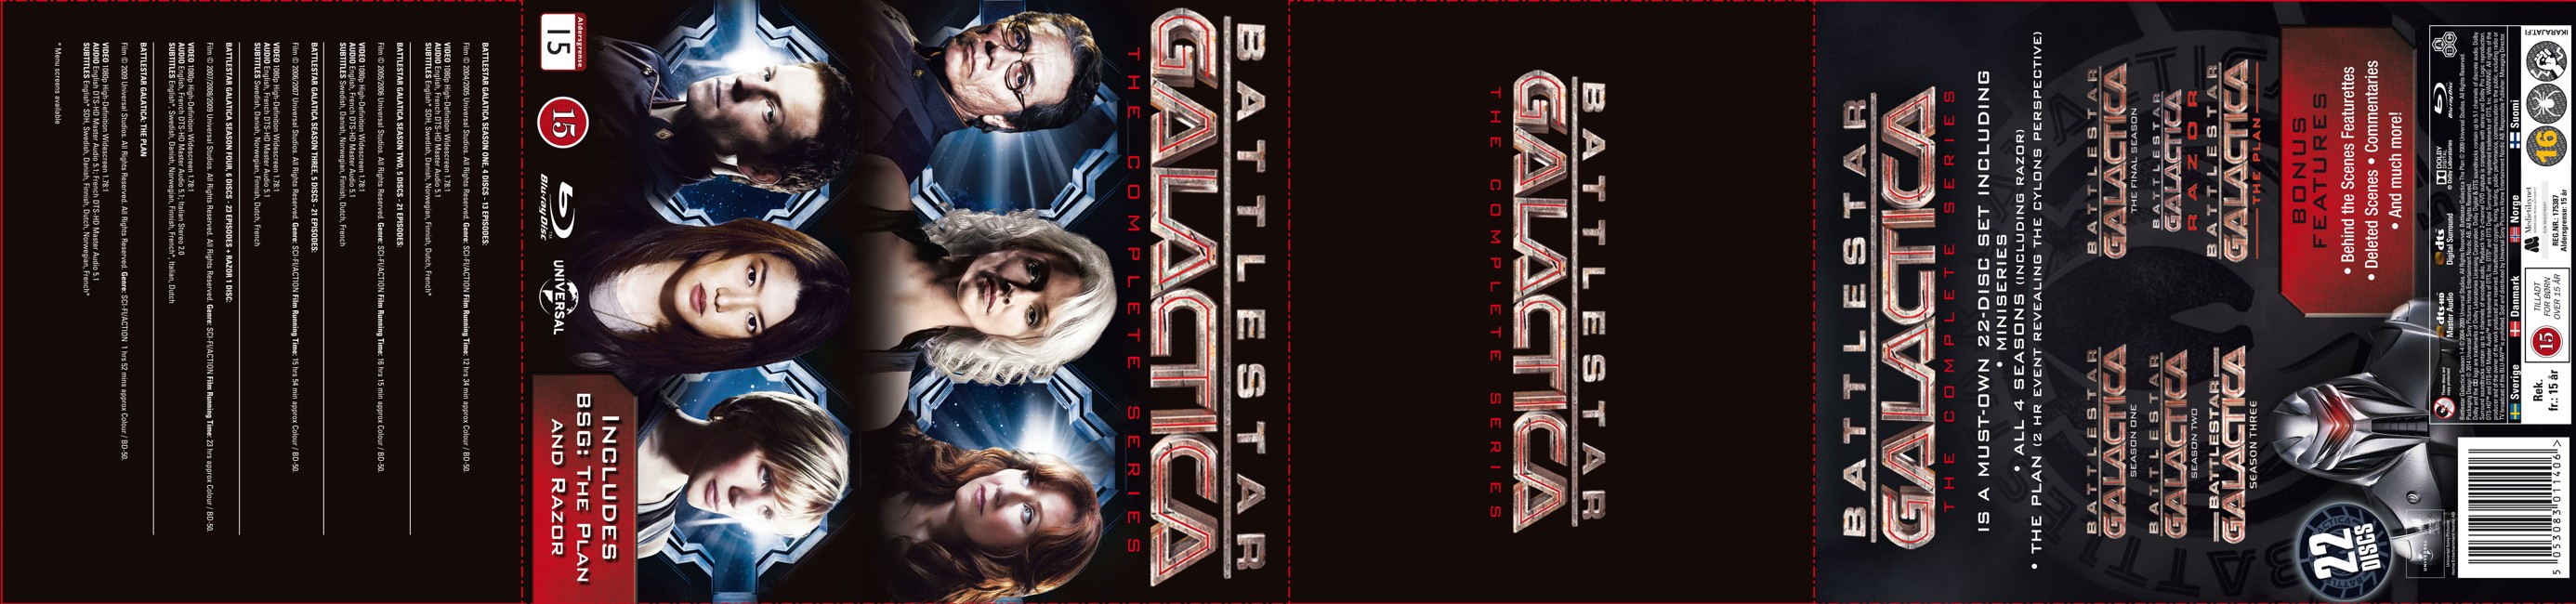 Battlestar Galactica - The Complete Series (22 disc)(Blu-Ray)